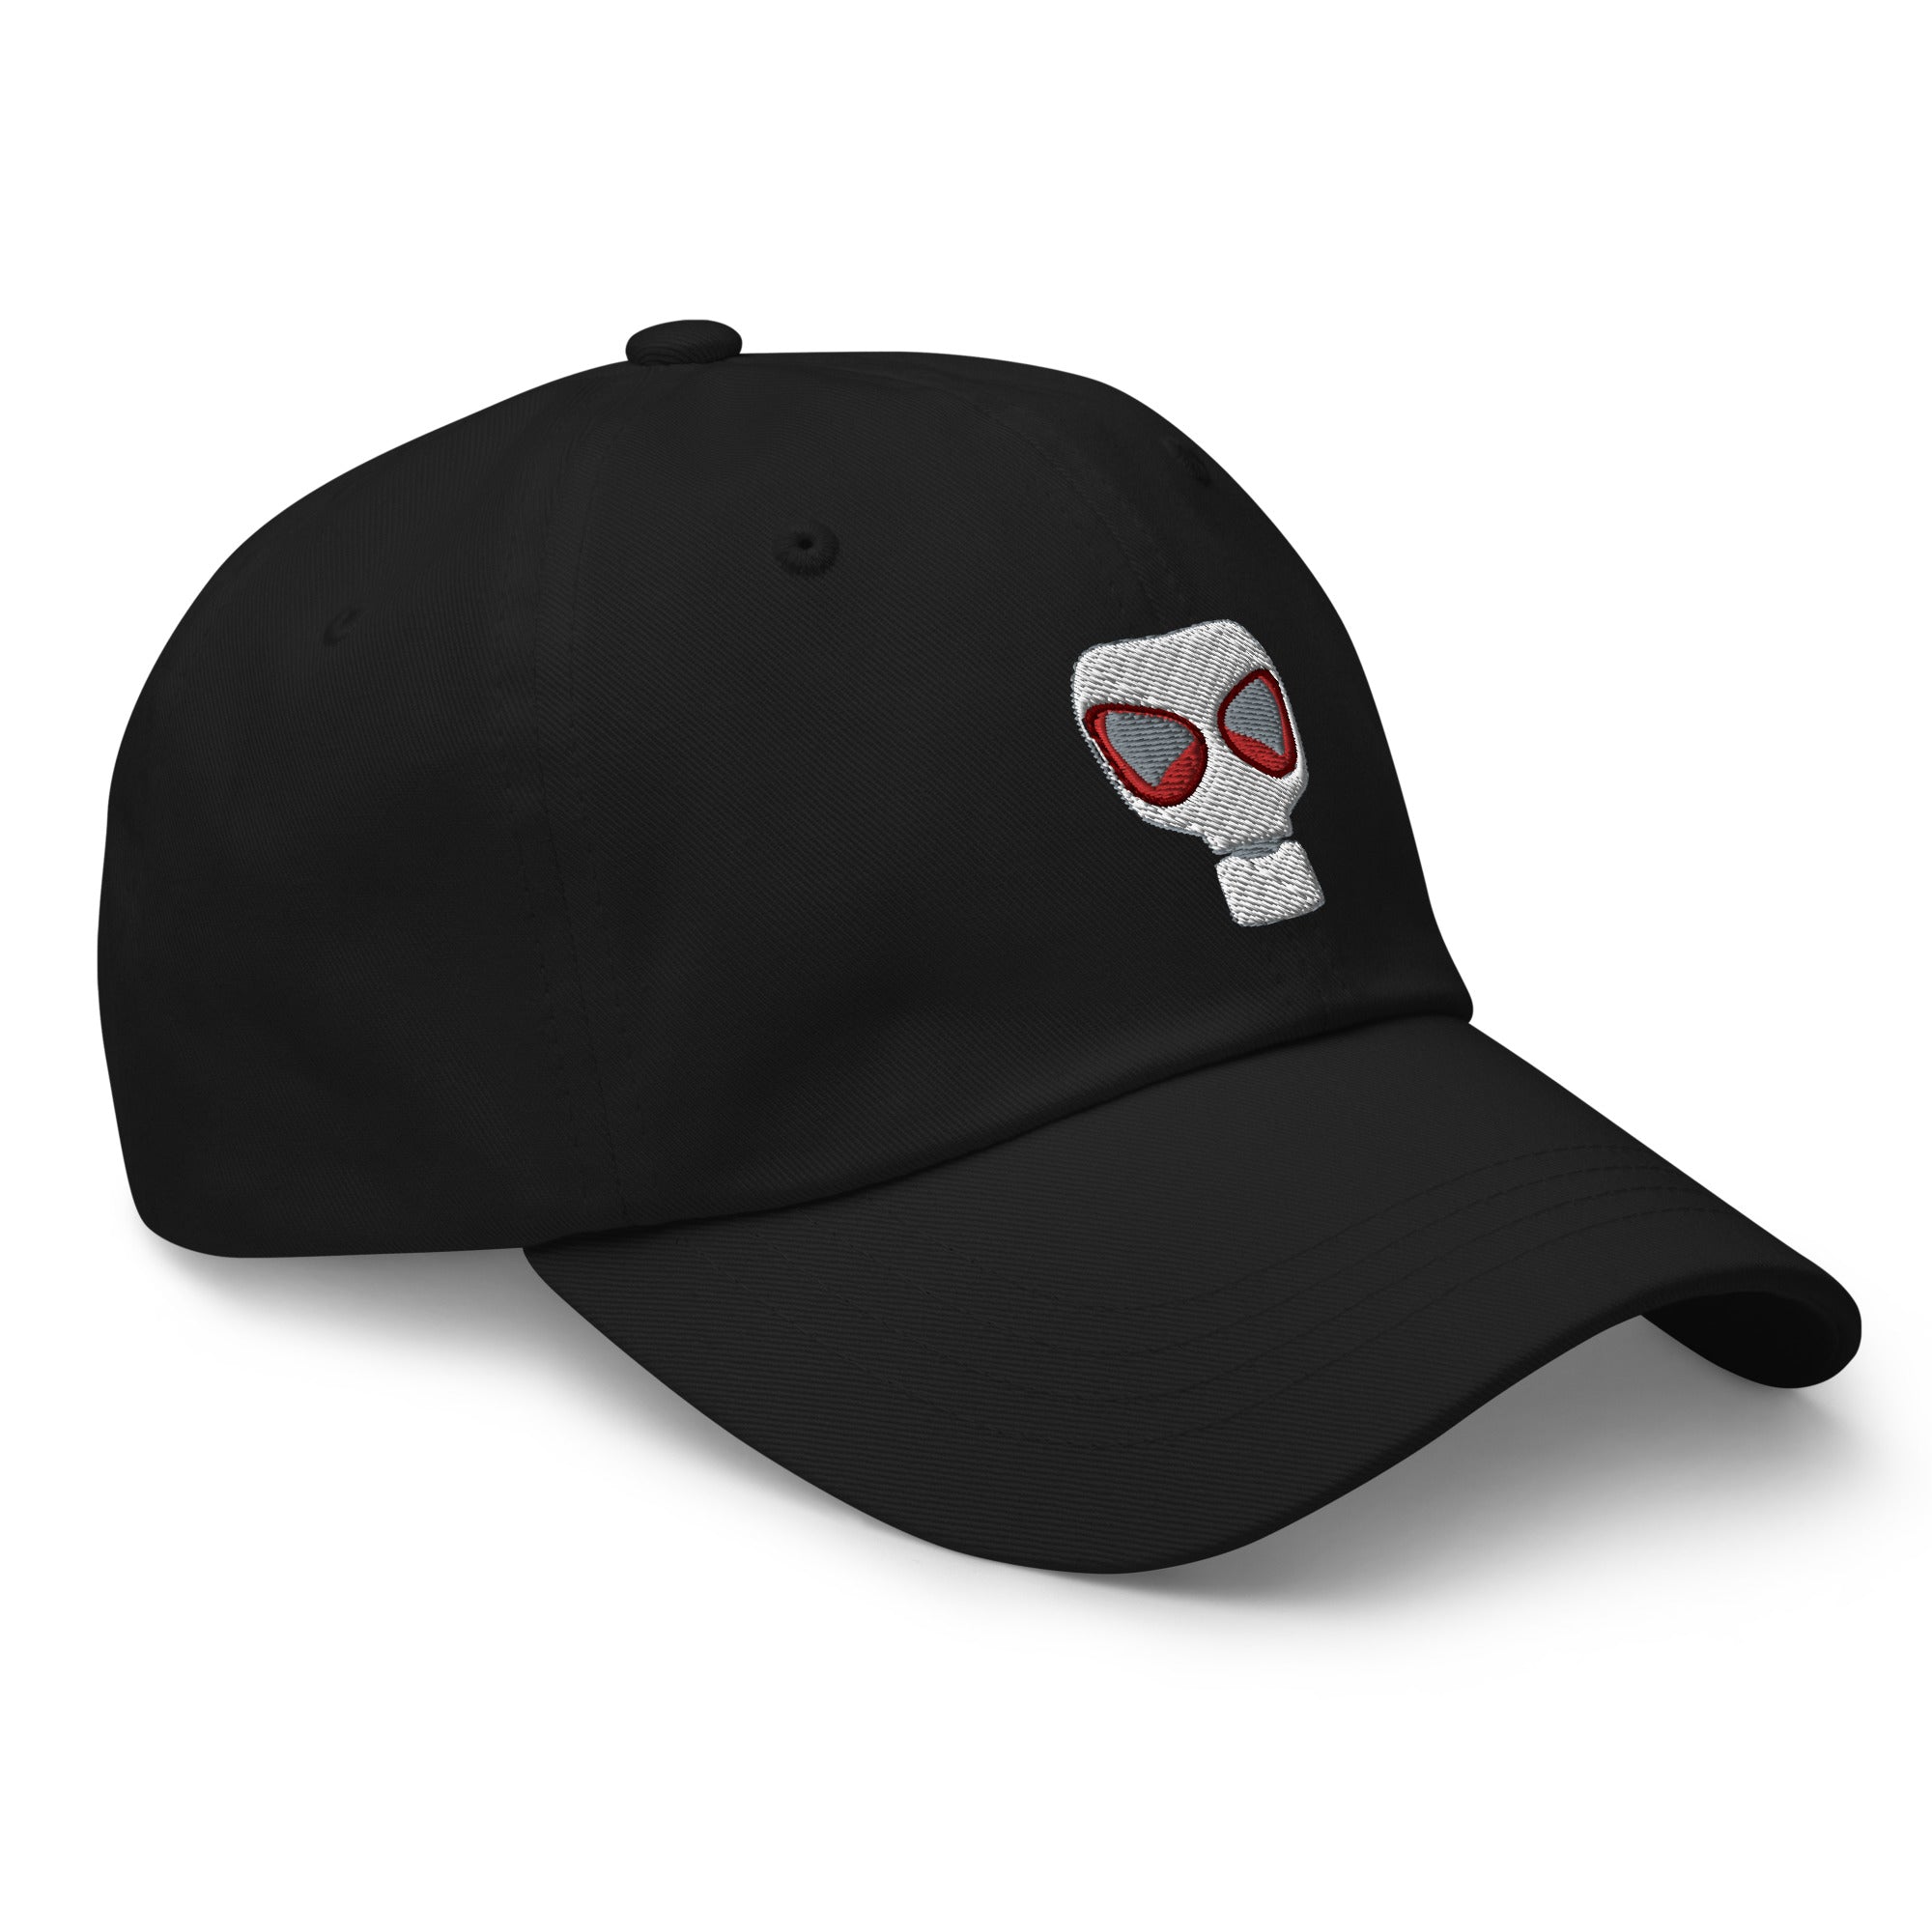 WWII Era Bio Hazard Gas Mask Embroidered Baseball Cap Doomsday Prepper Dad hat - Edge of Life Designs